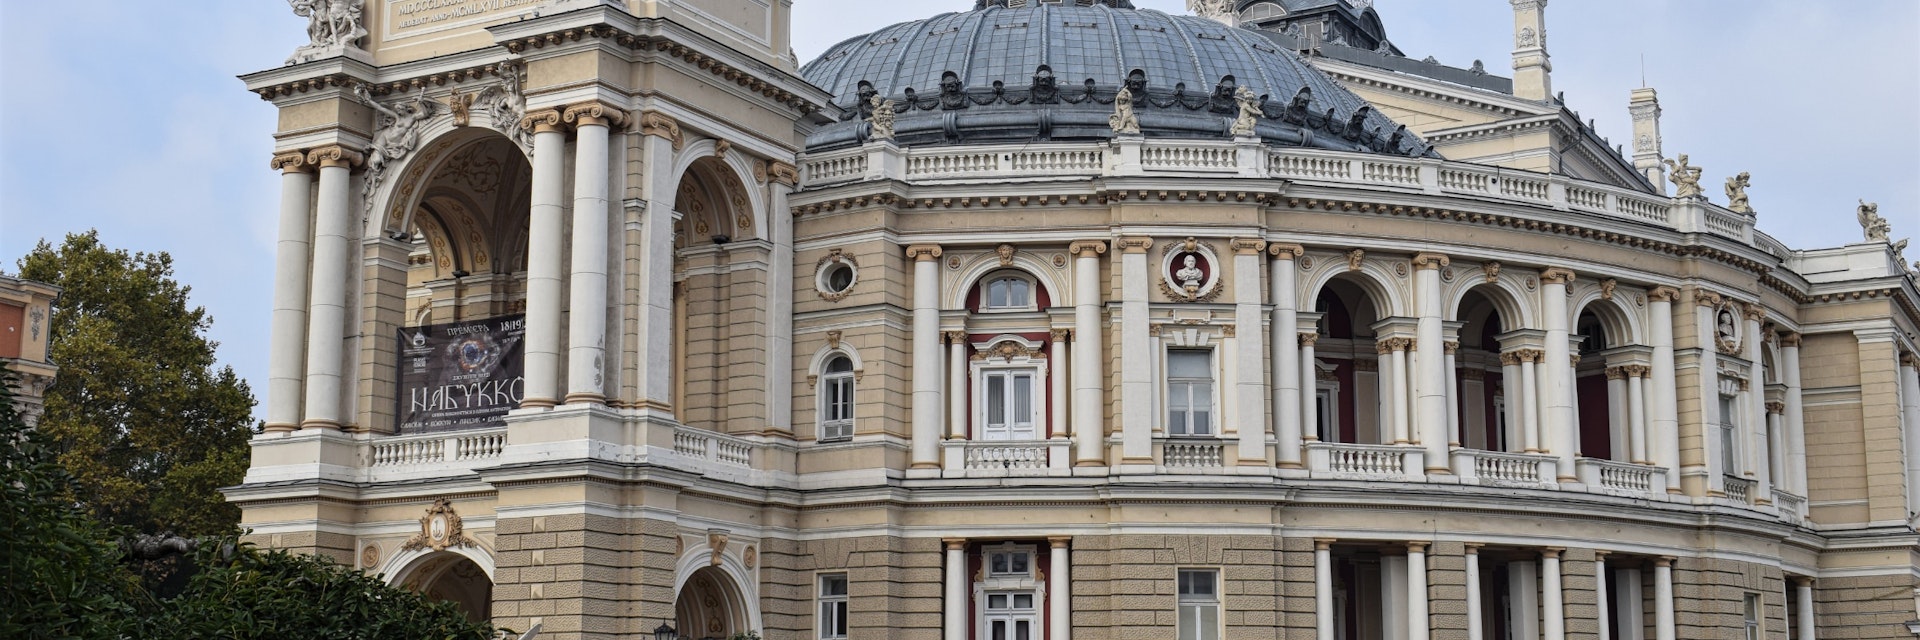 The Odesa Opera & Ballet Theatre building, designed in the 1880s